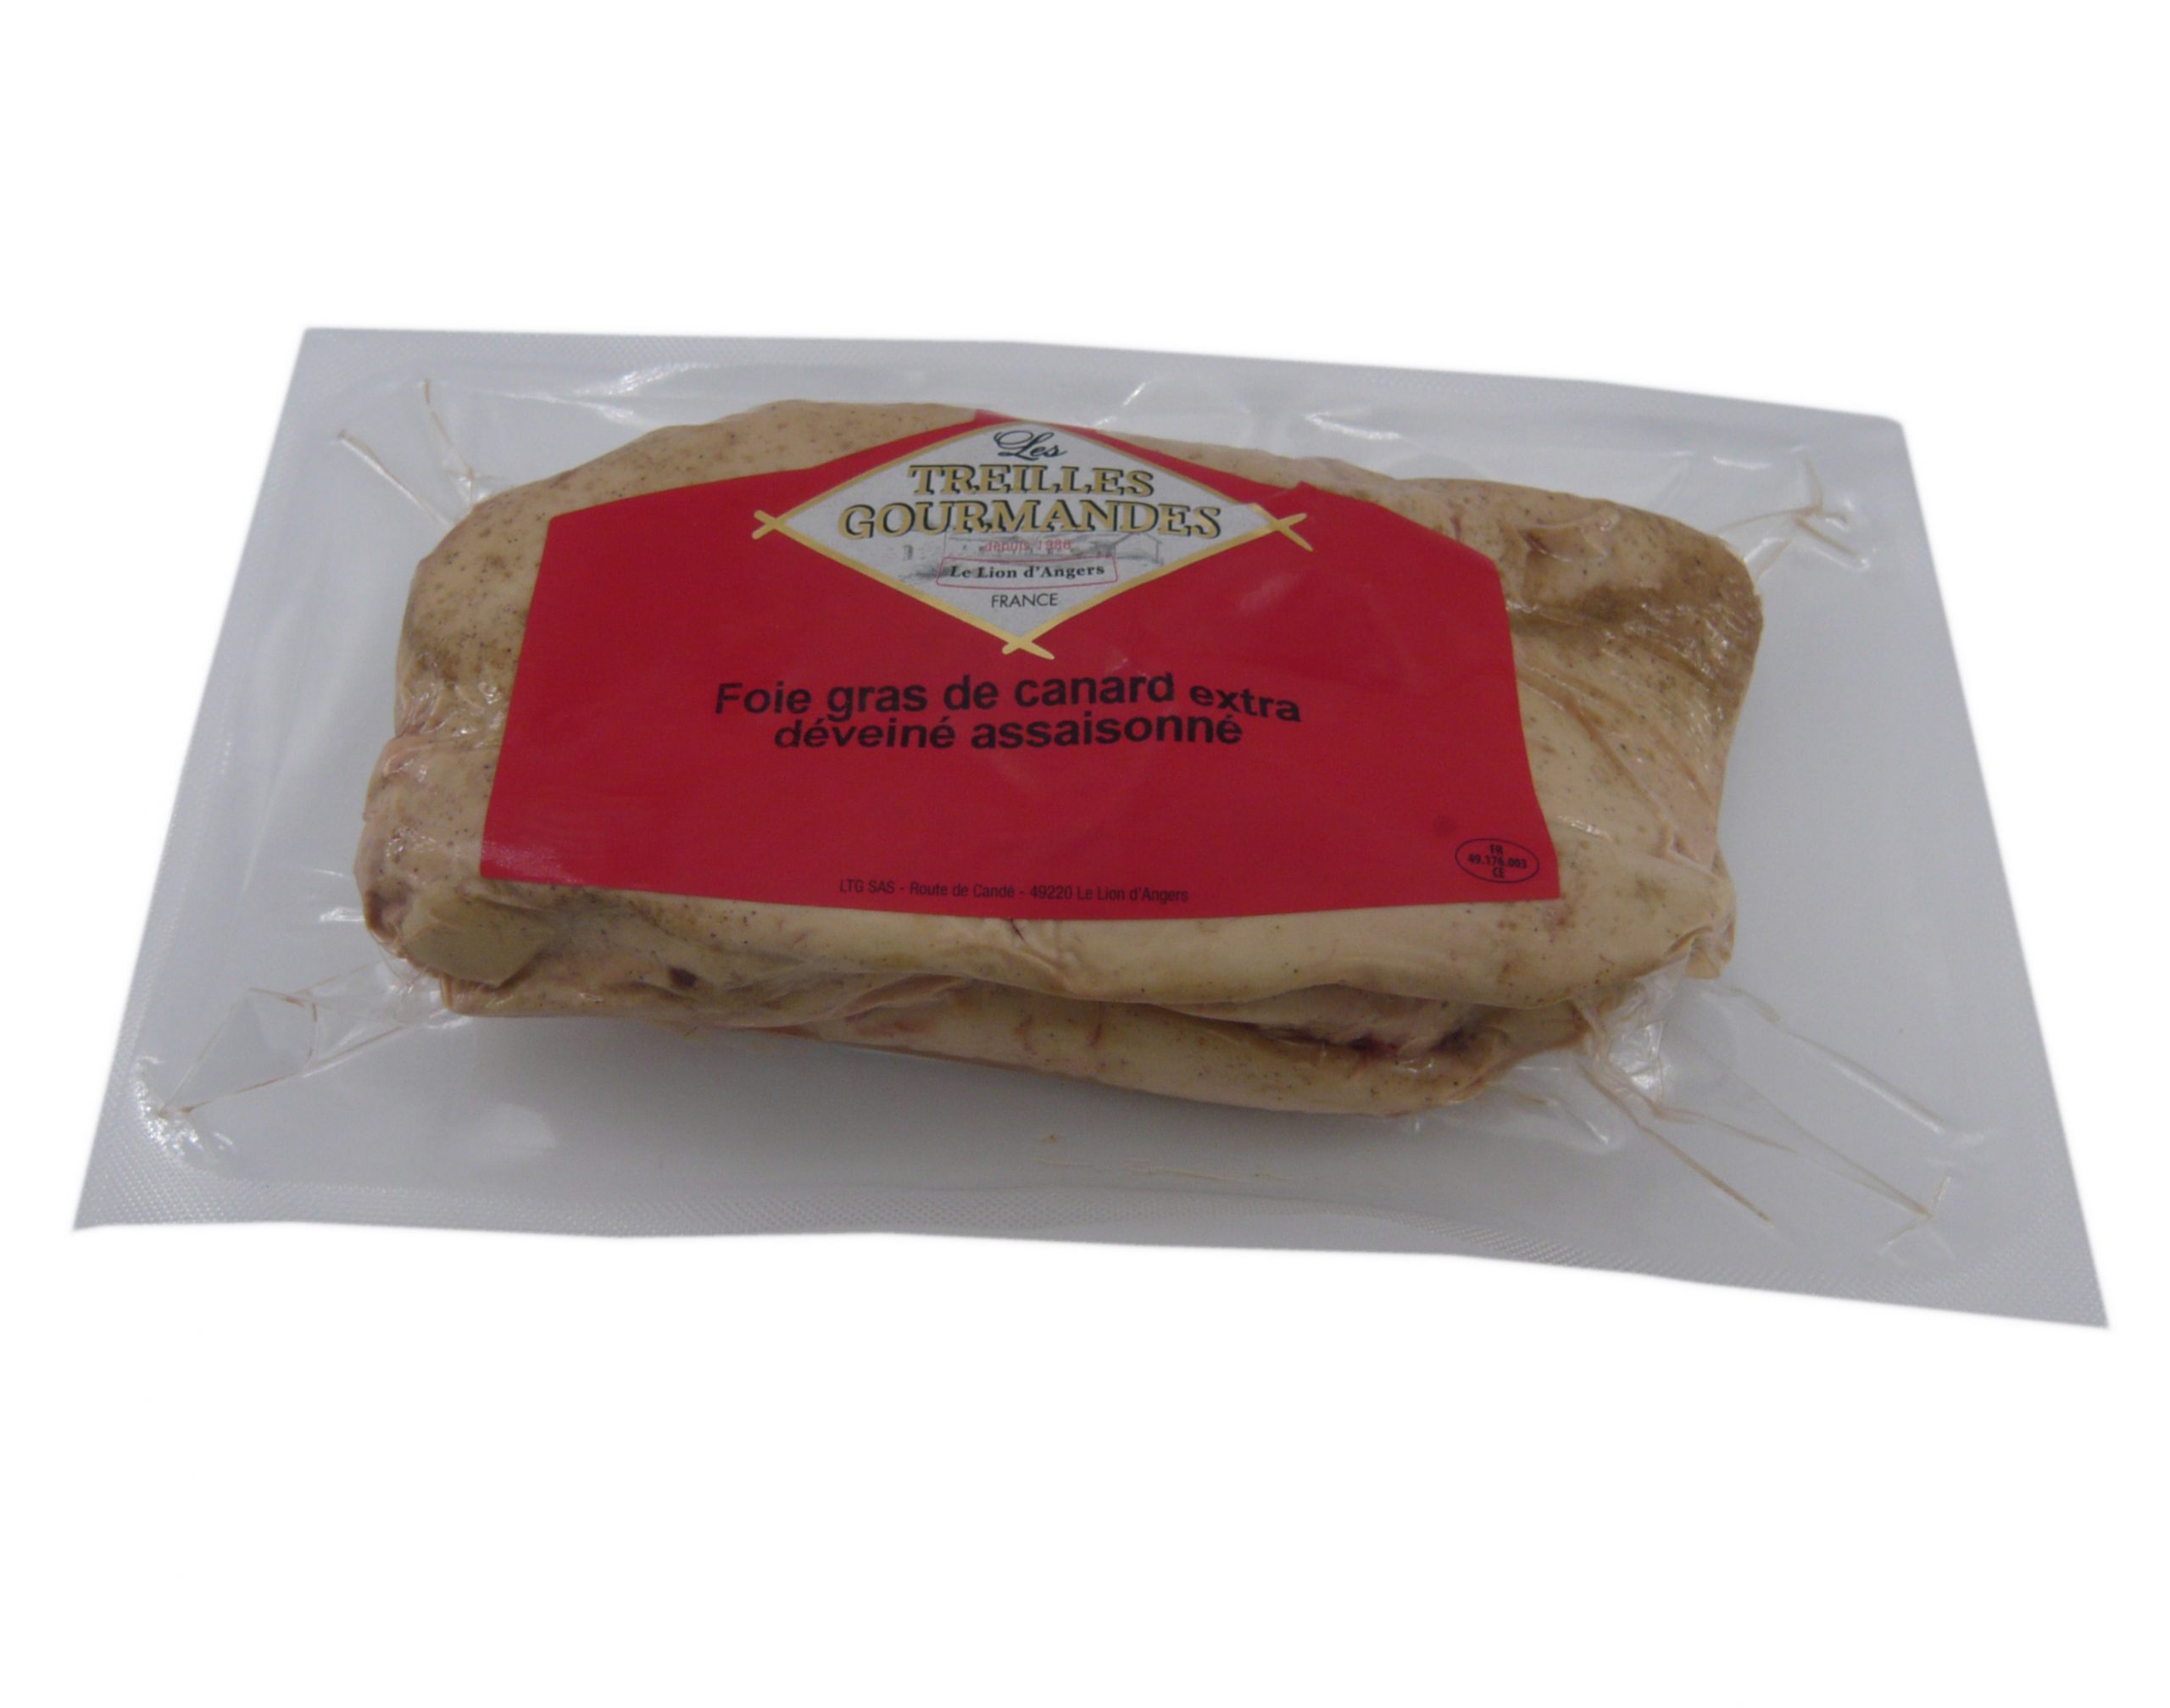 Foie gras de canard cru extra déveiné assaisonné, poids fixe 420g